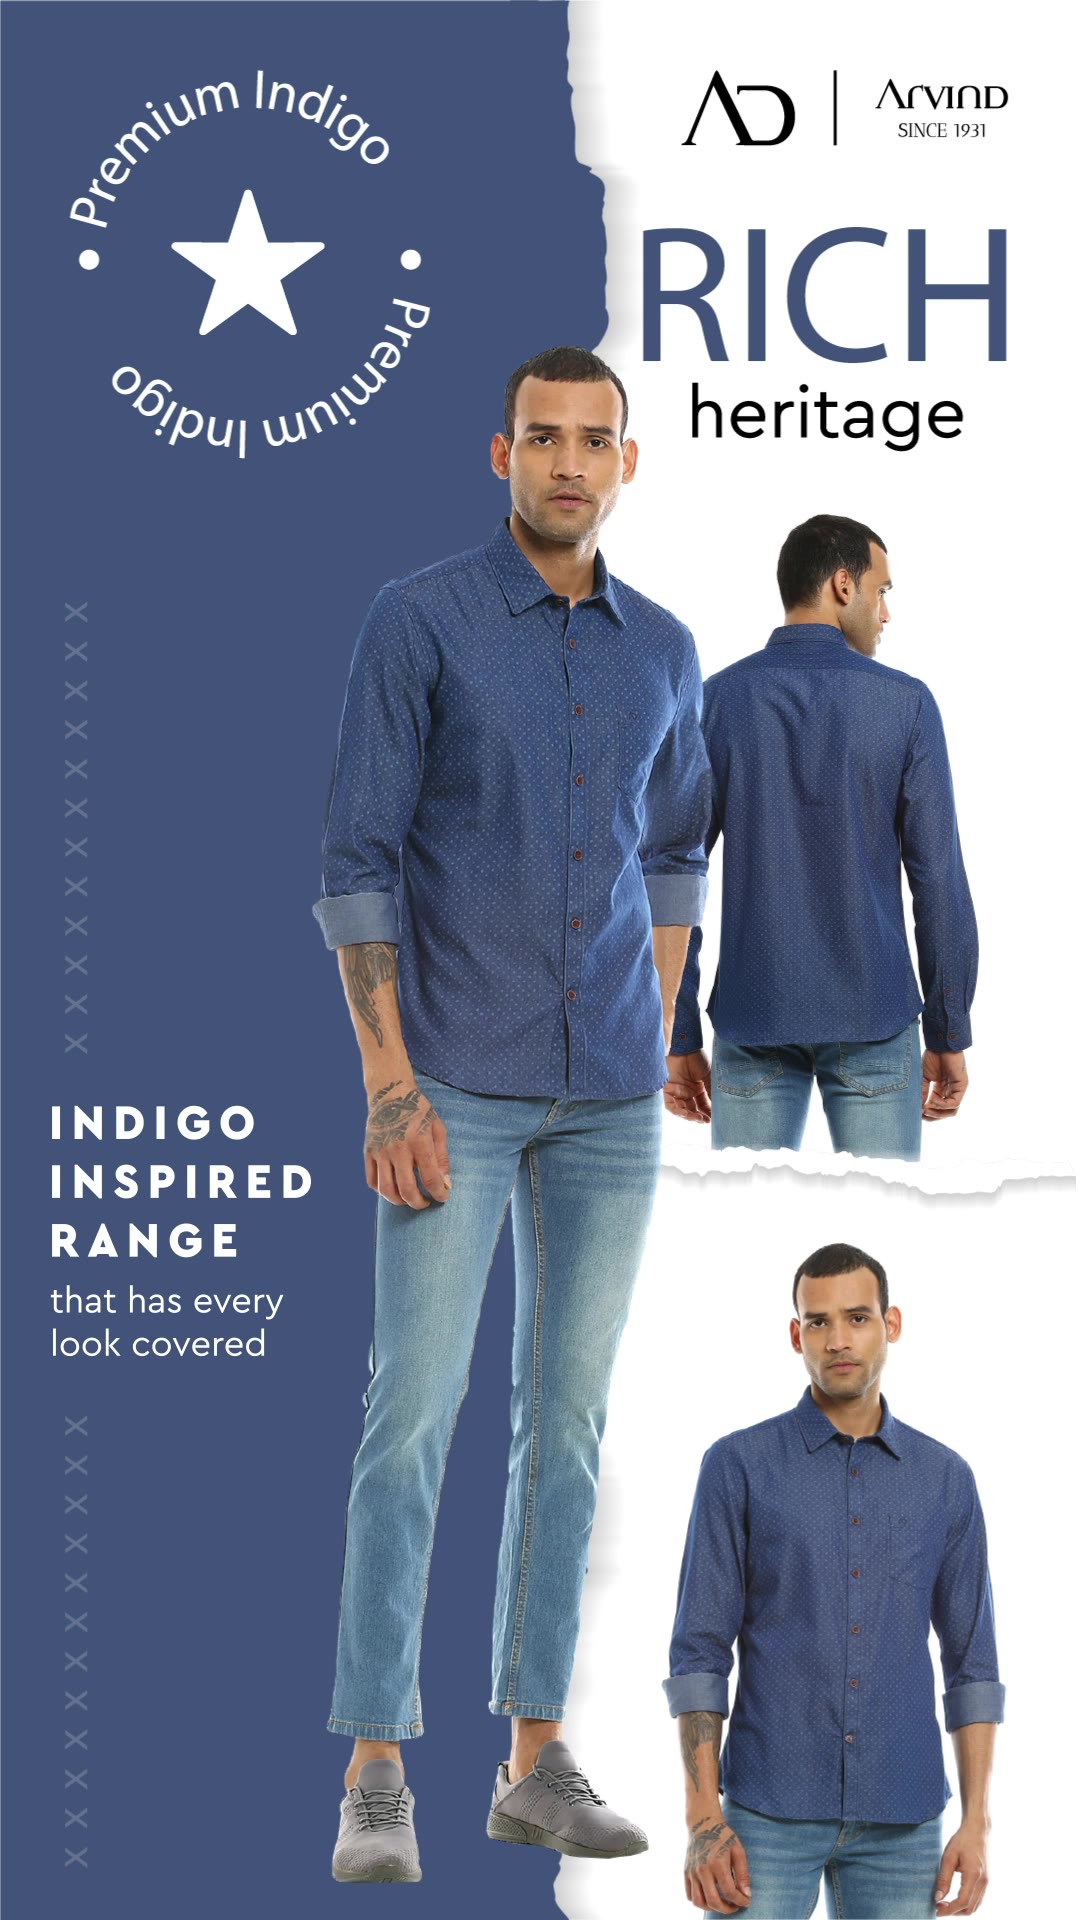 Classic shirts loved by all.

Shop Now:
https://arvind.nnnow.com
.
.
.
.
.
.
.
.
.
.
.
.
.
#Arvind #FashioningPossibilities #Menswear
#shirtformen #fashion #style #shirts #clothes #mensfashion #clothing #jeans #tshirts #ootd #love #menswear #dress #shopping #shoes #onlineshopping #designershirt #design #instagood #pants #jacket #streetwear #like #indigoshirt #shirtdesign #model #outfit #apparel